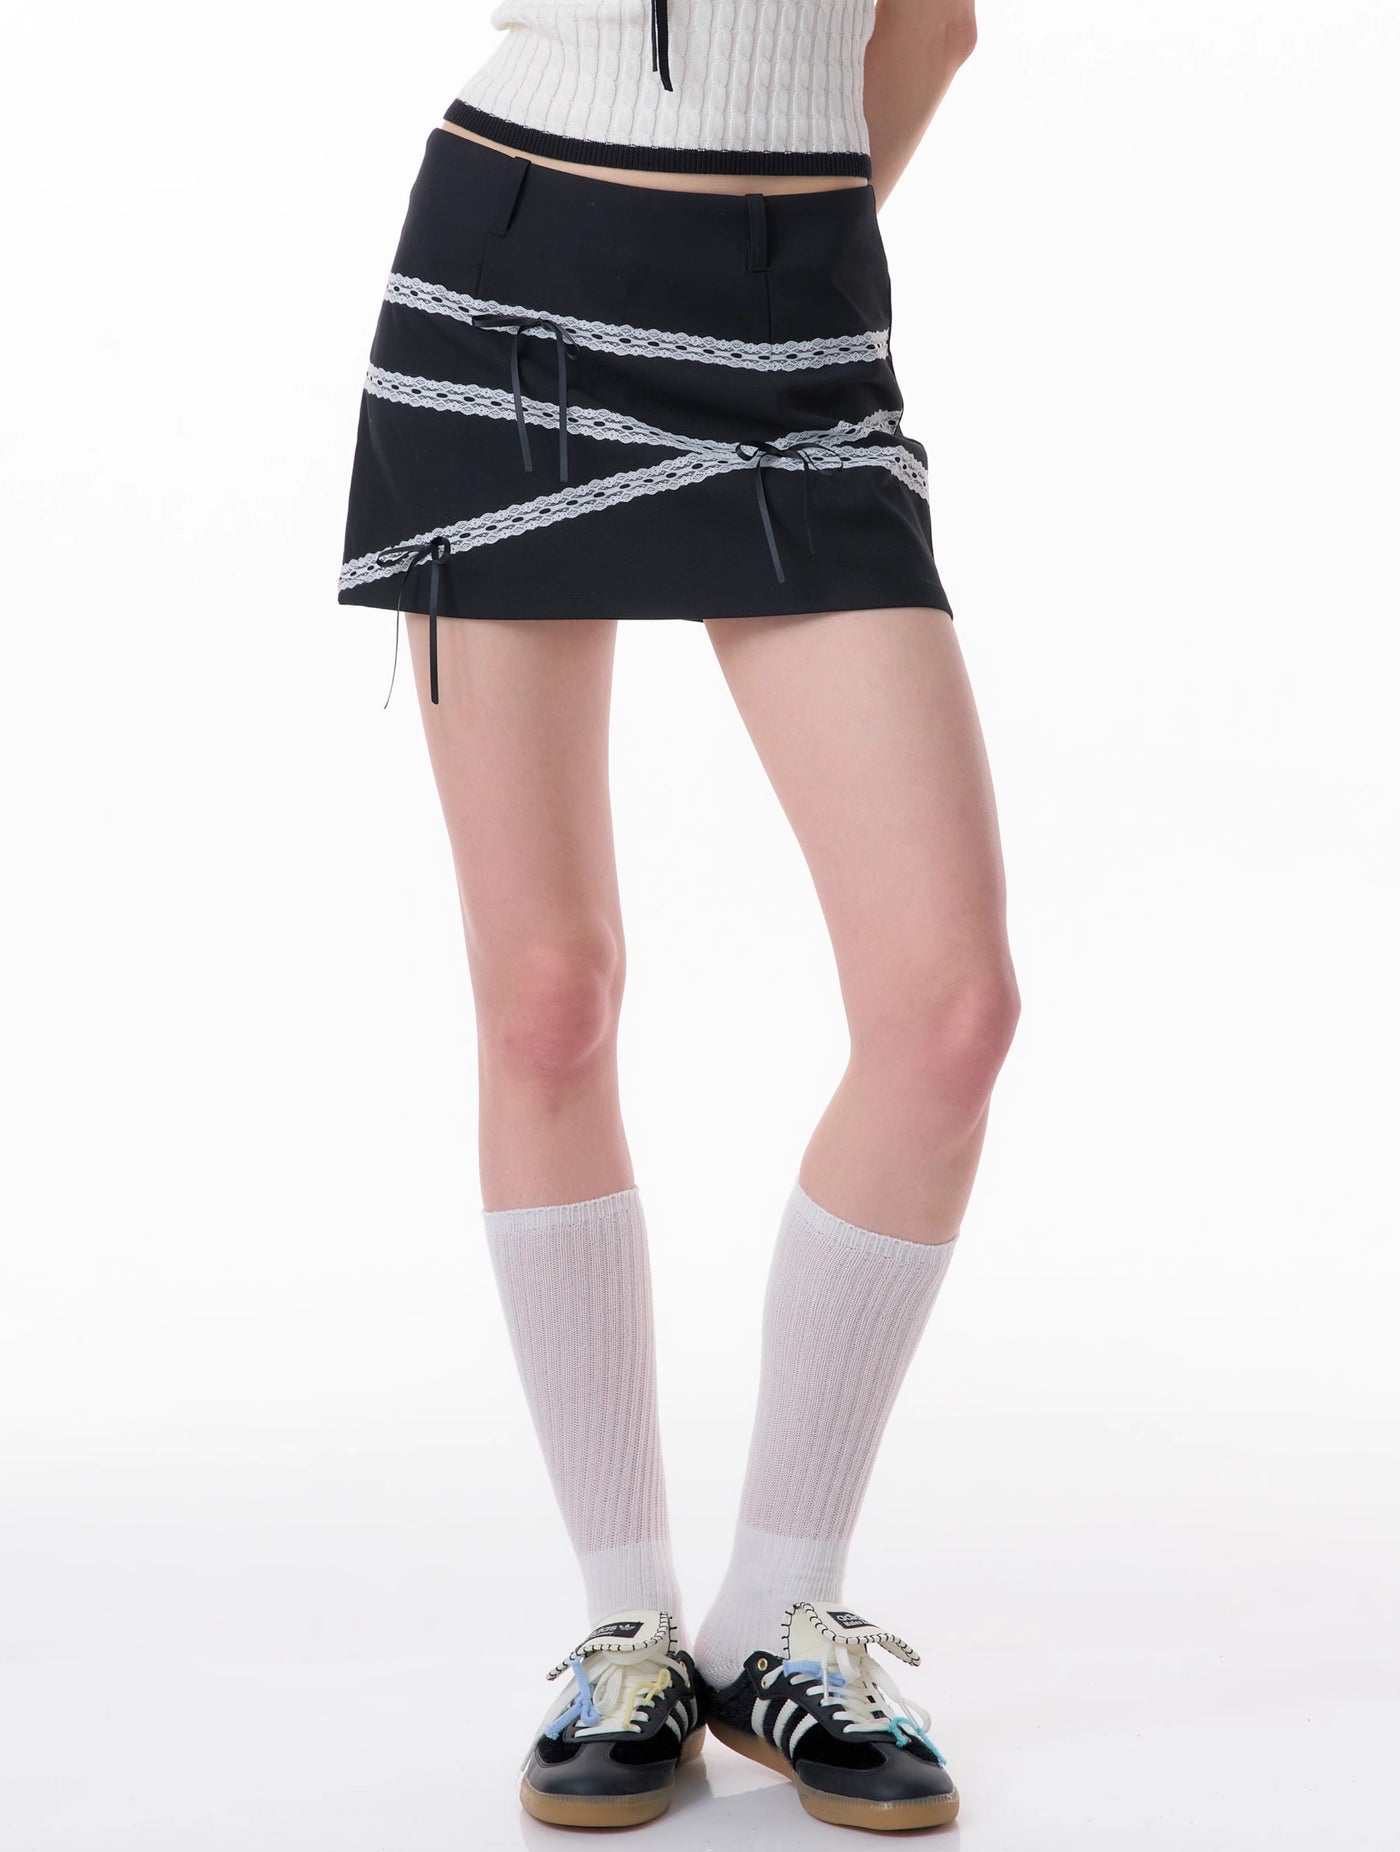 Bow Lace Black Short Skirt ZIZ0081